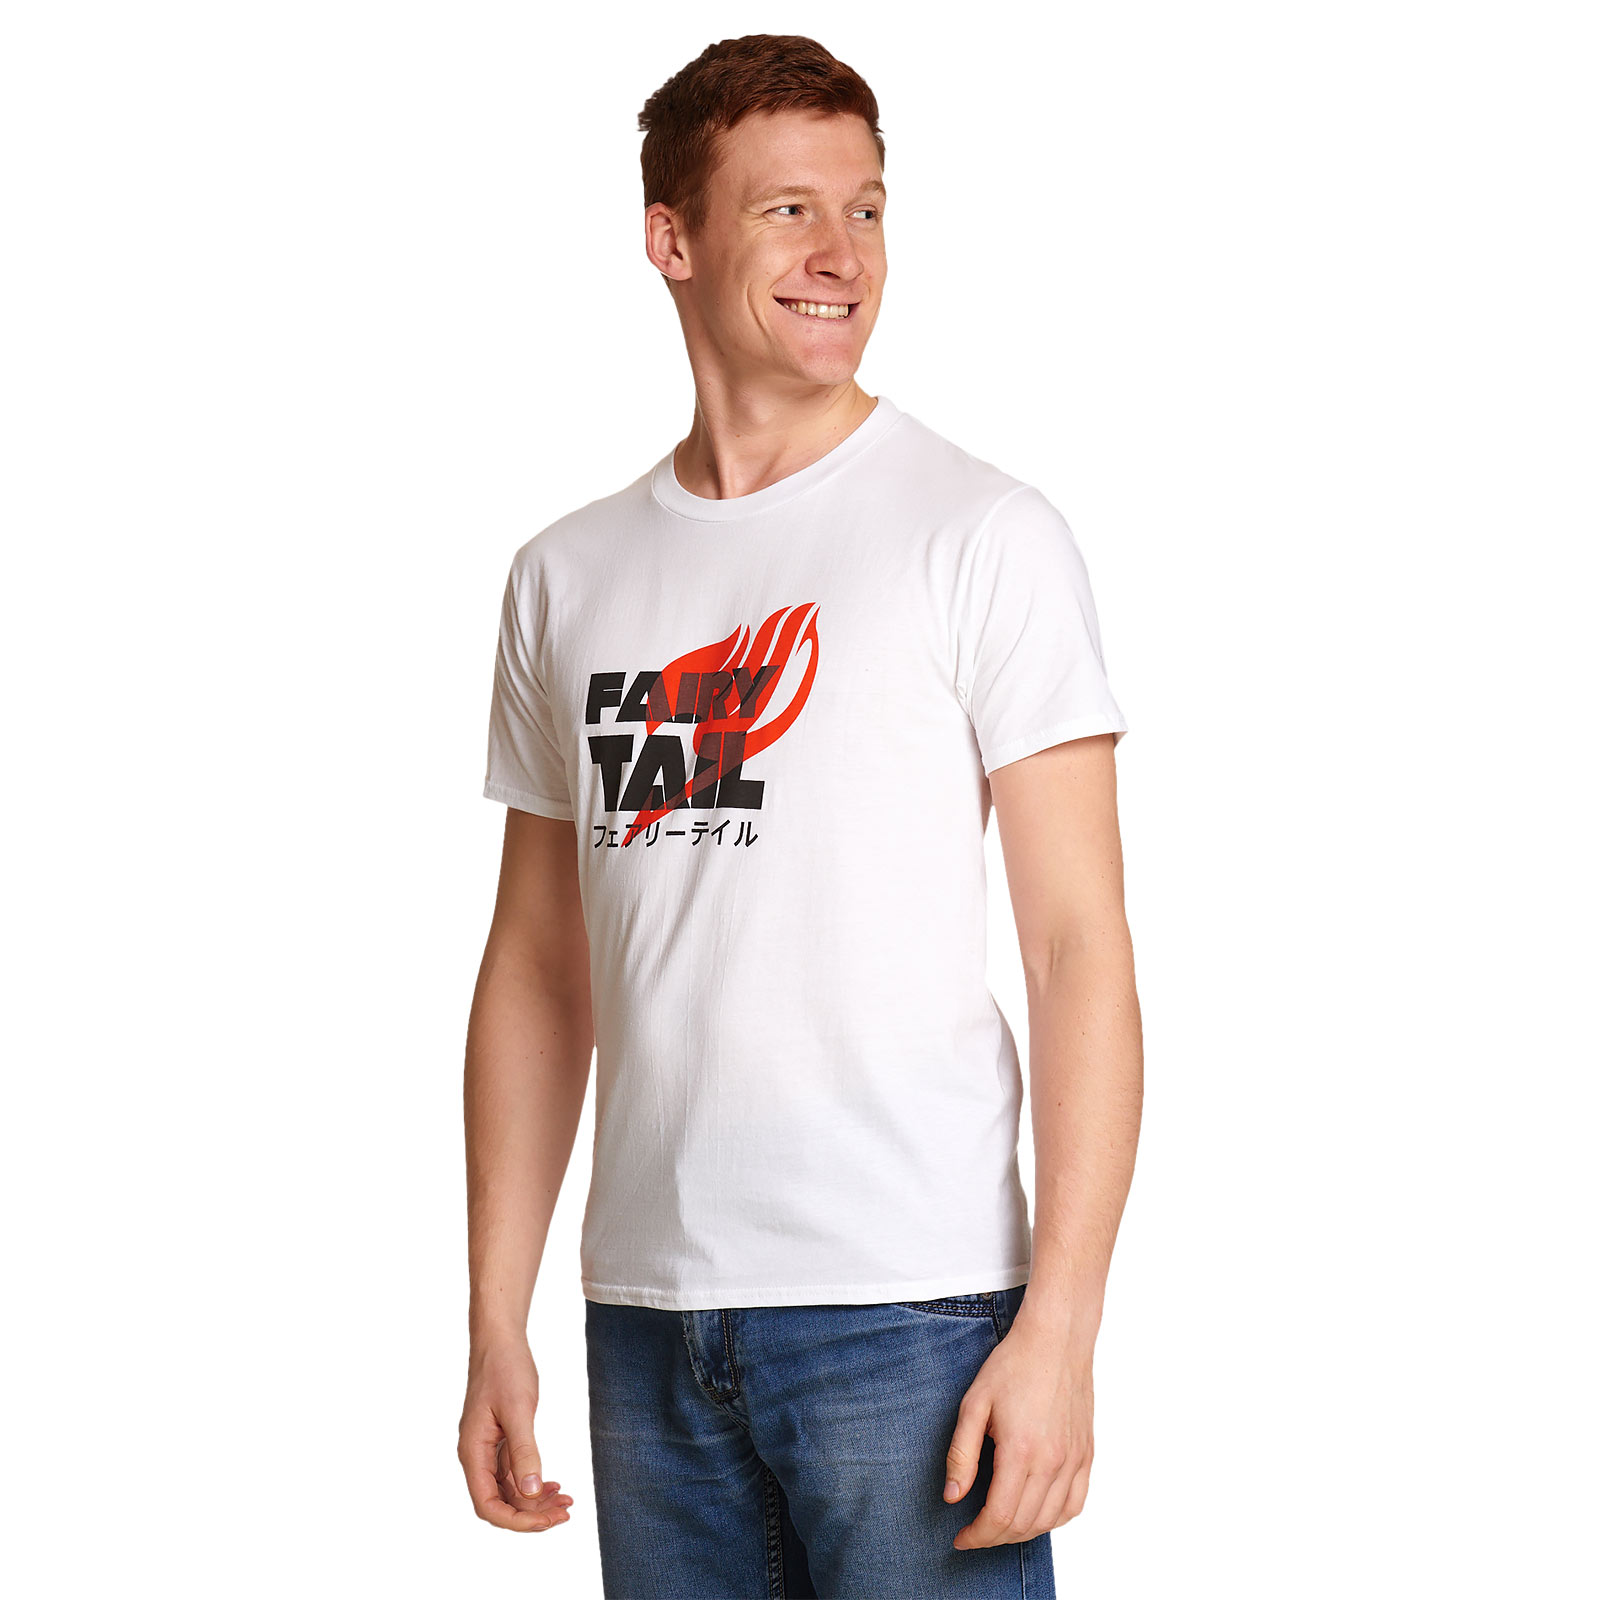 Fairy Tail - Logo Katakana T-Shirt white